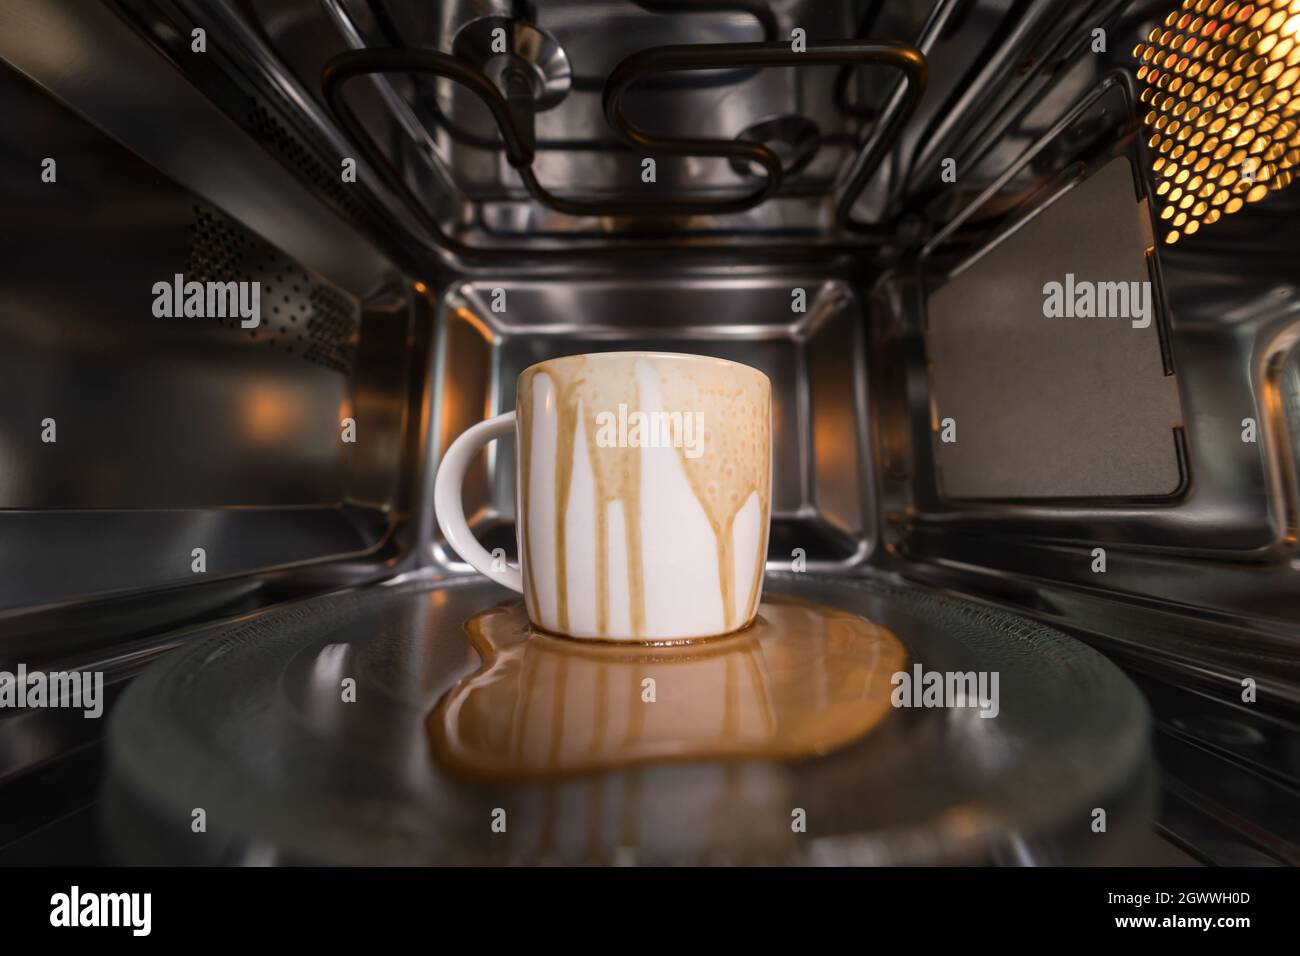 Taza de café sucia Después de operar con horno de microondas, calentar agua  en microondas puede ser peligroso Fotografía de stock - Alamy